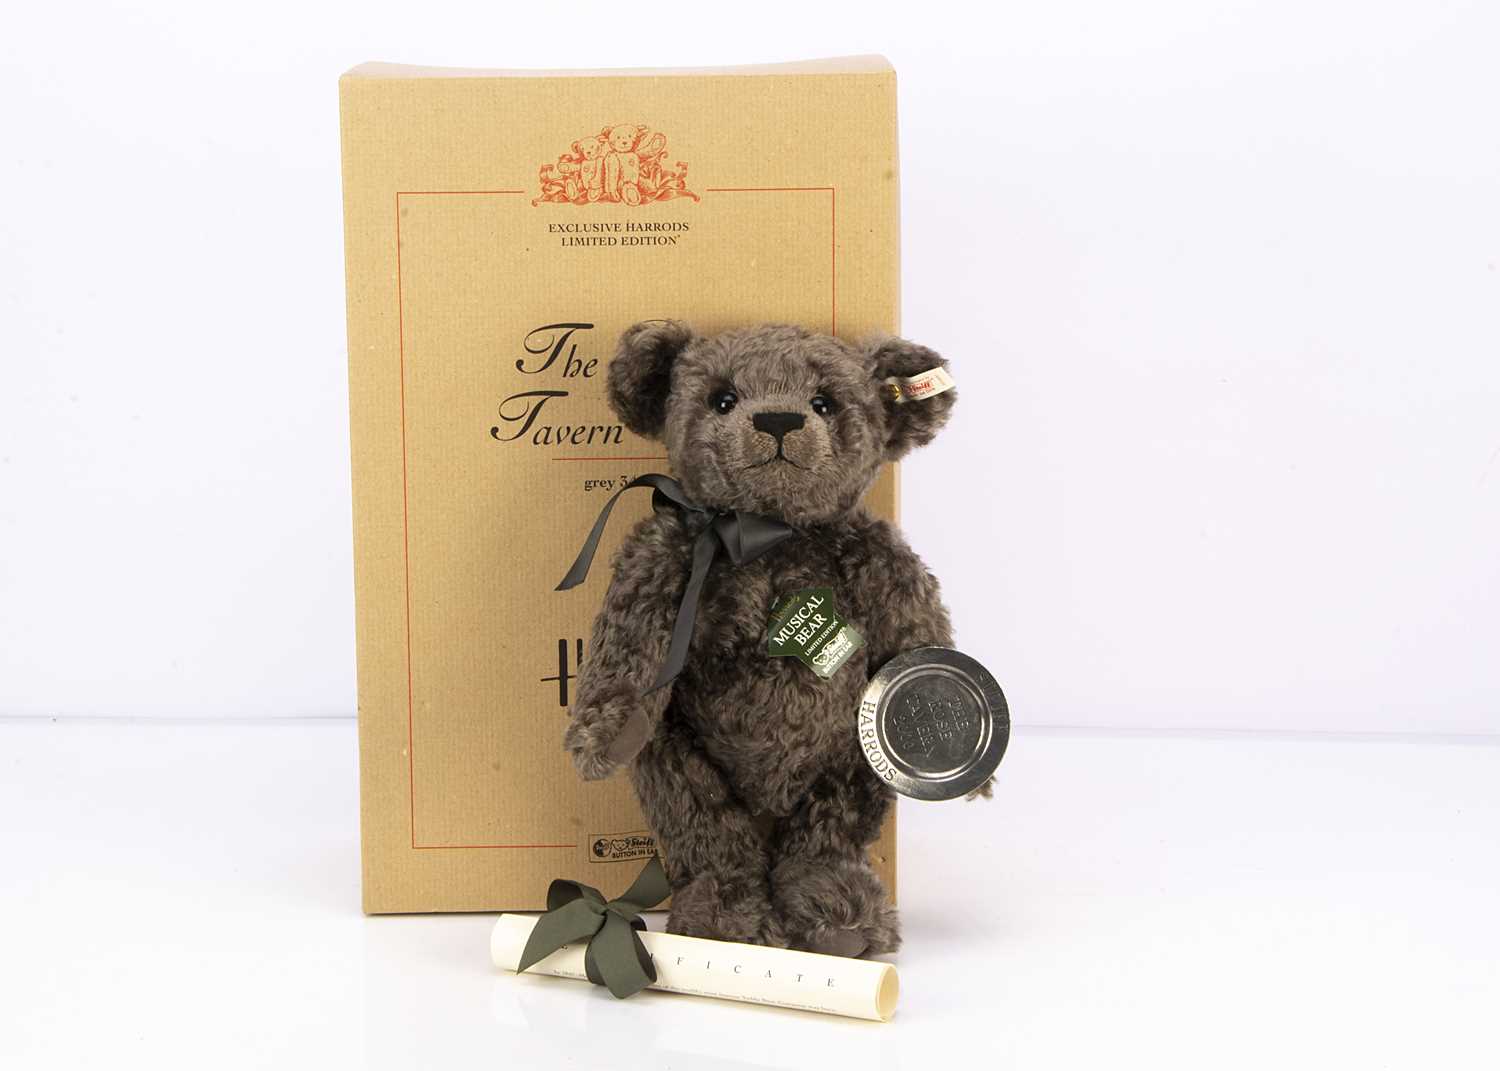 Lot 22 - A Steiff limited edition Harrods Musical Rose Tavern teddy bear